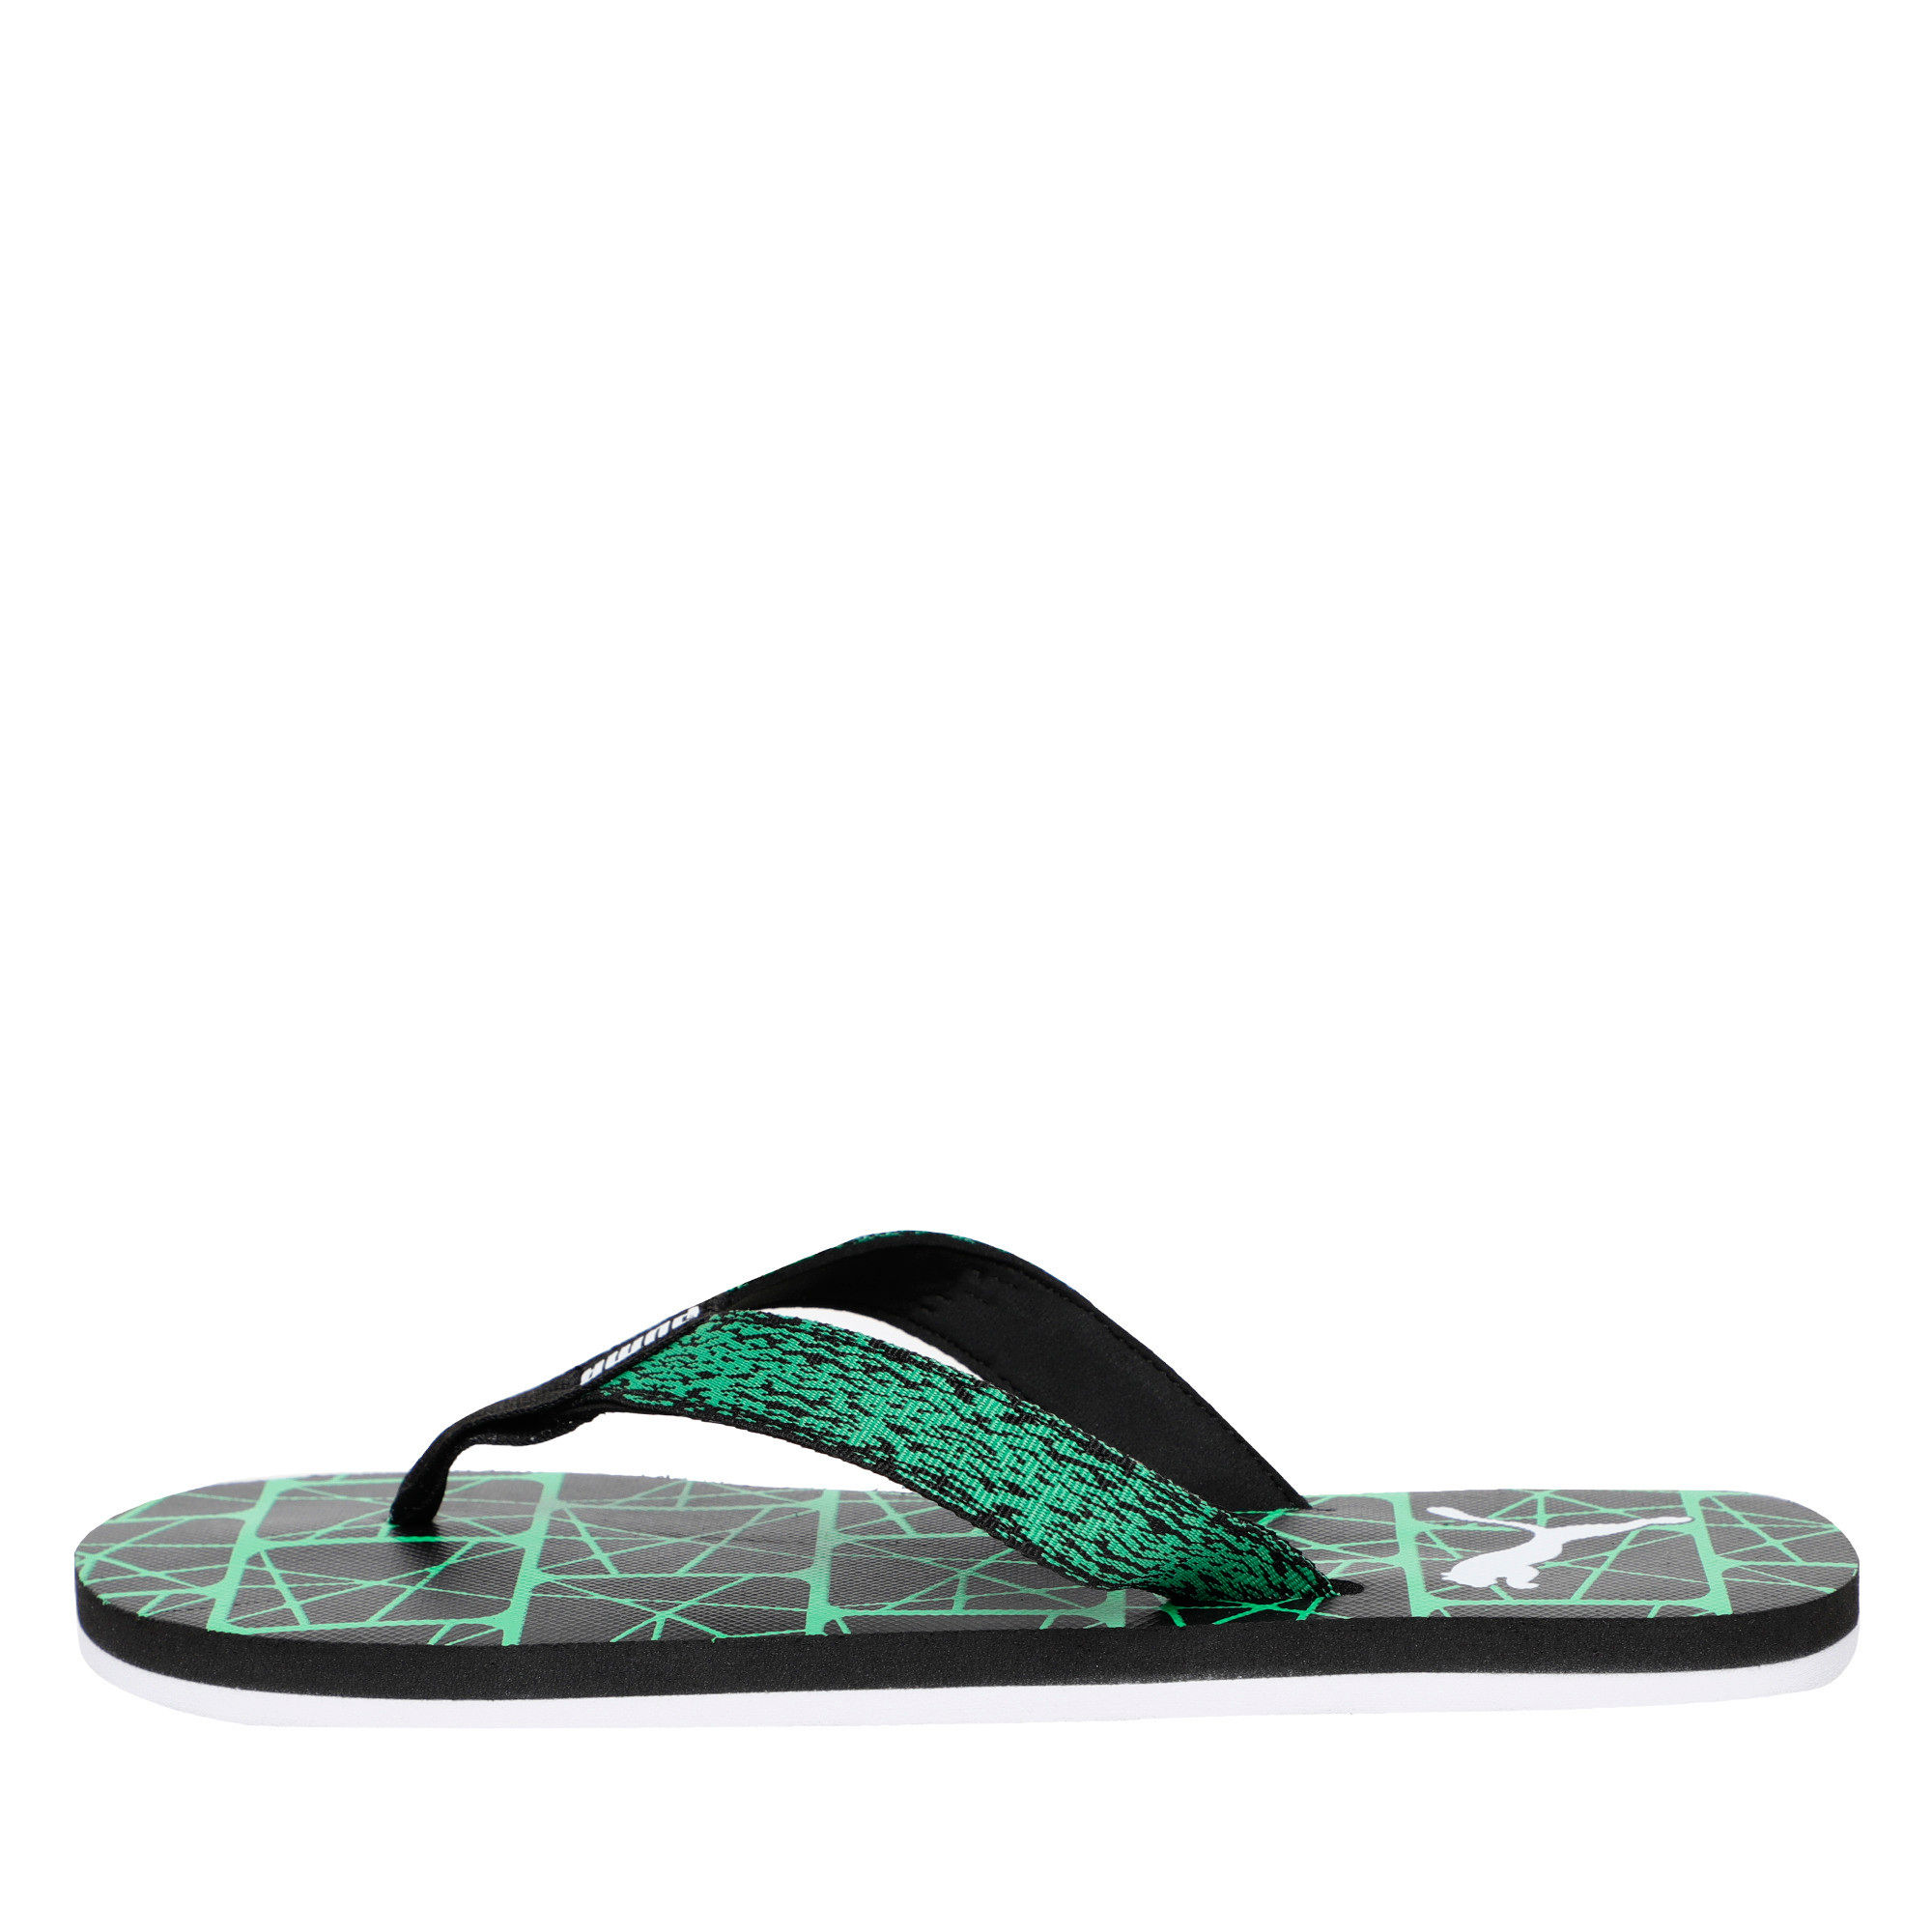 puma teal green flip flops